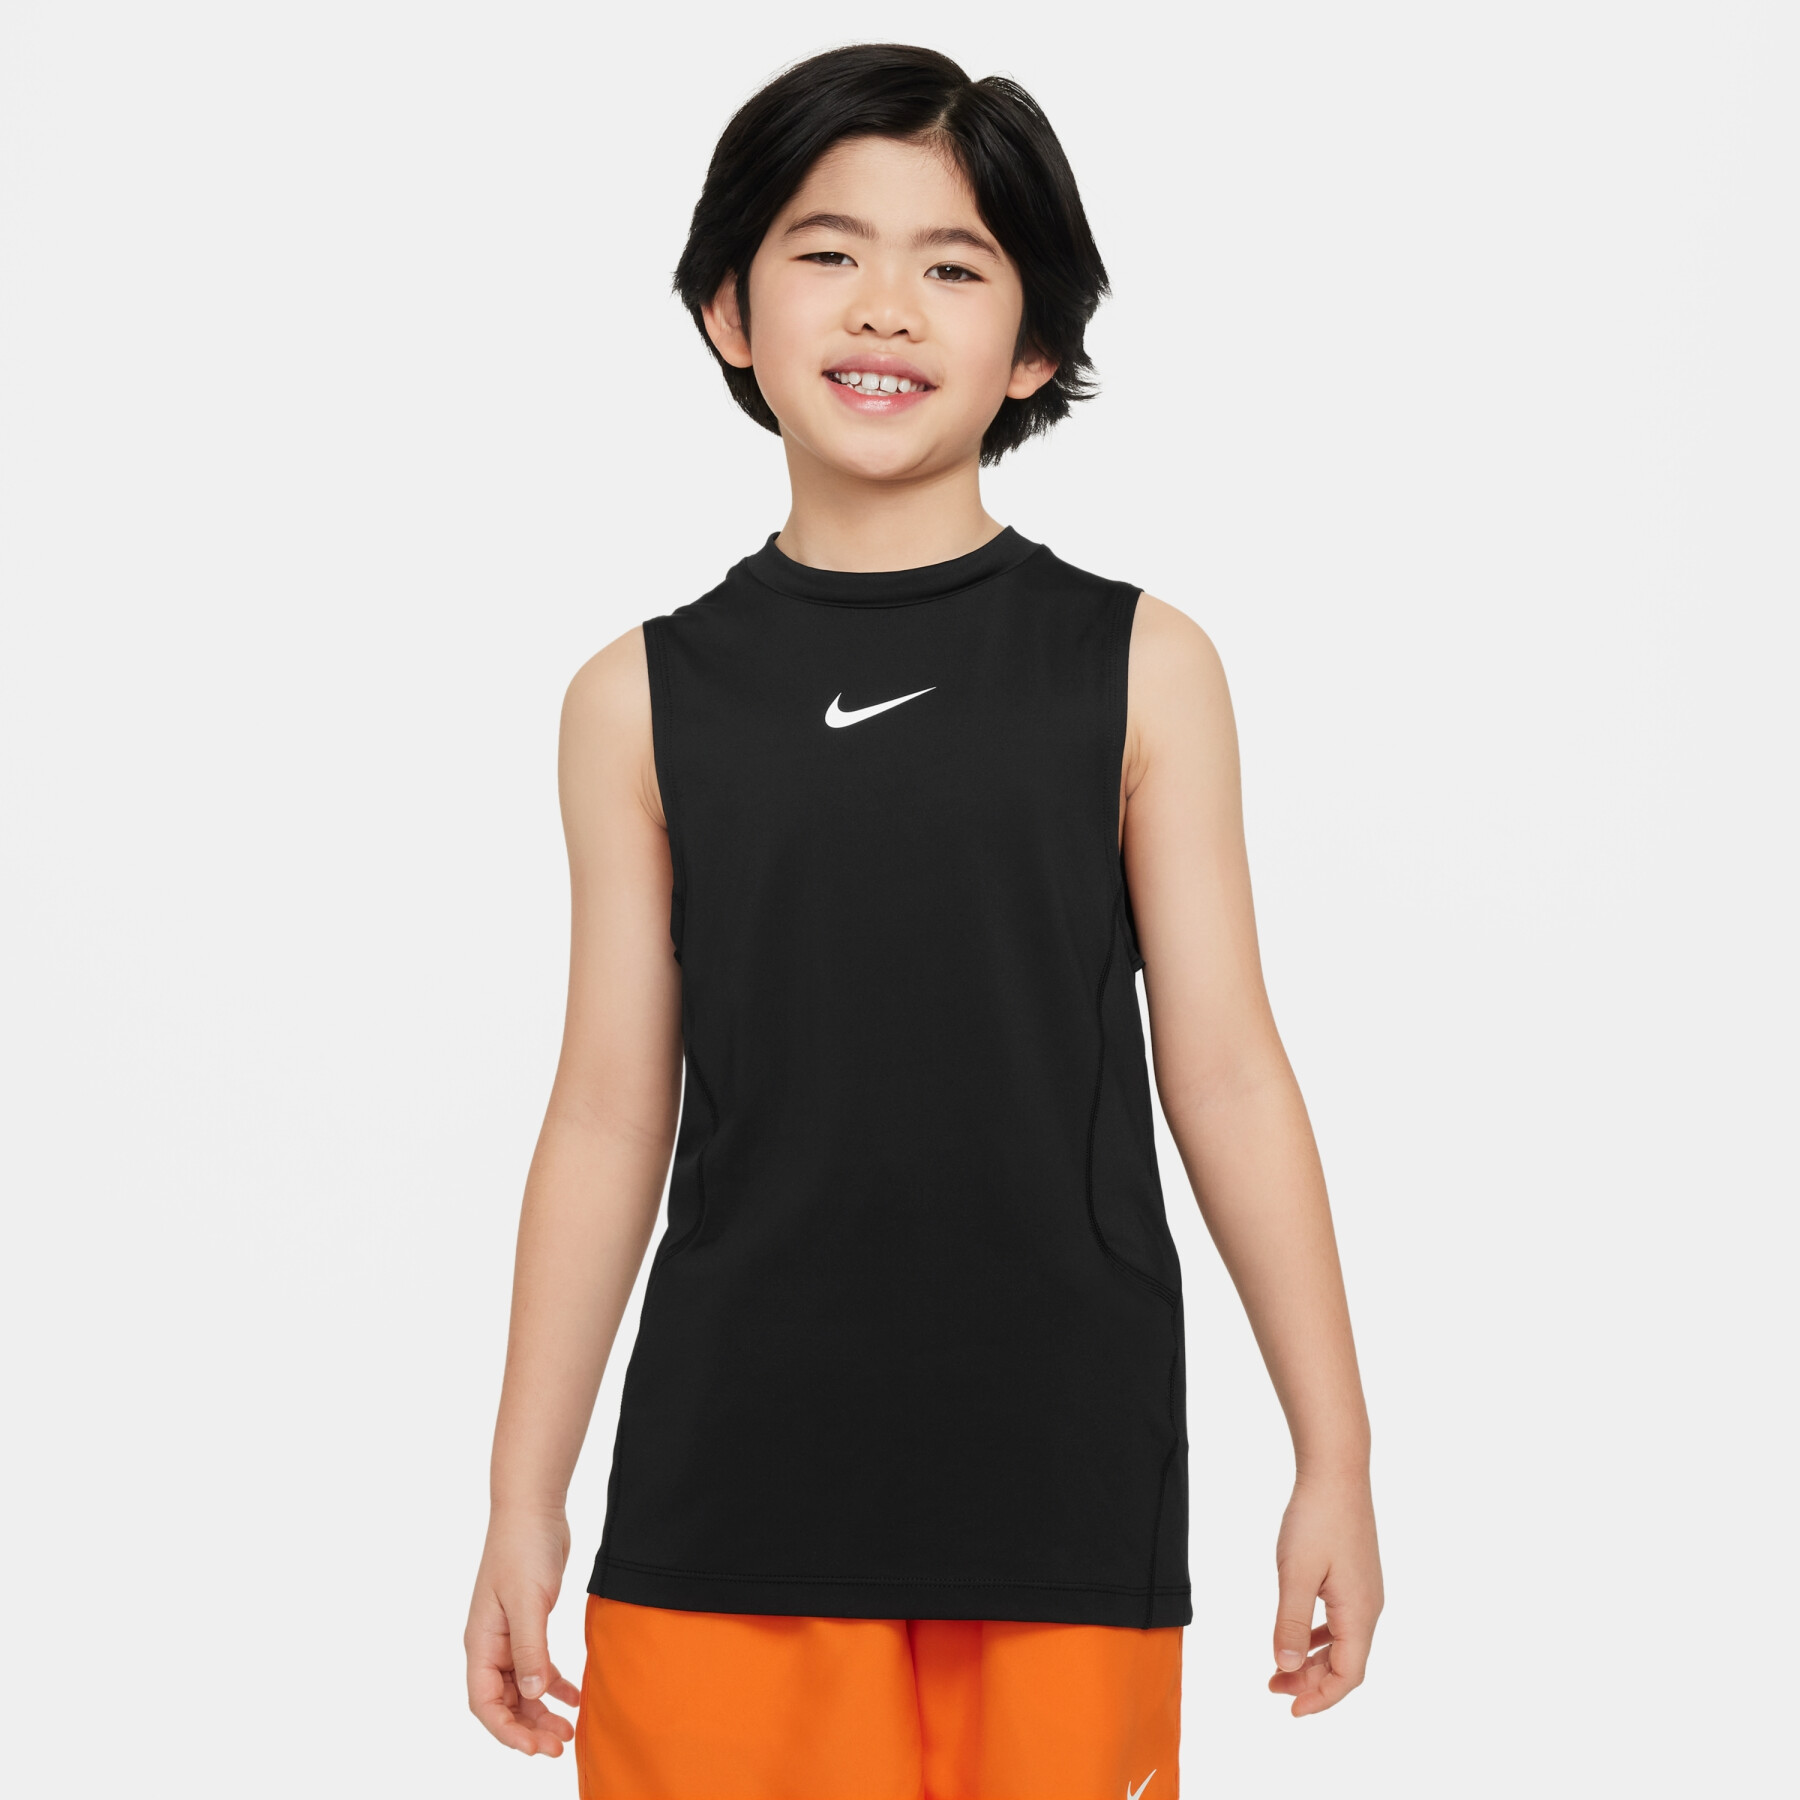 Canottiera per bambini Nike Pro